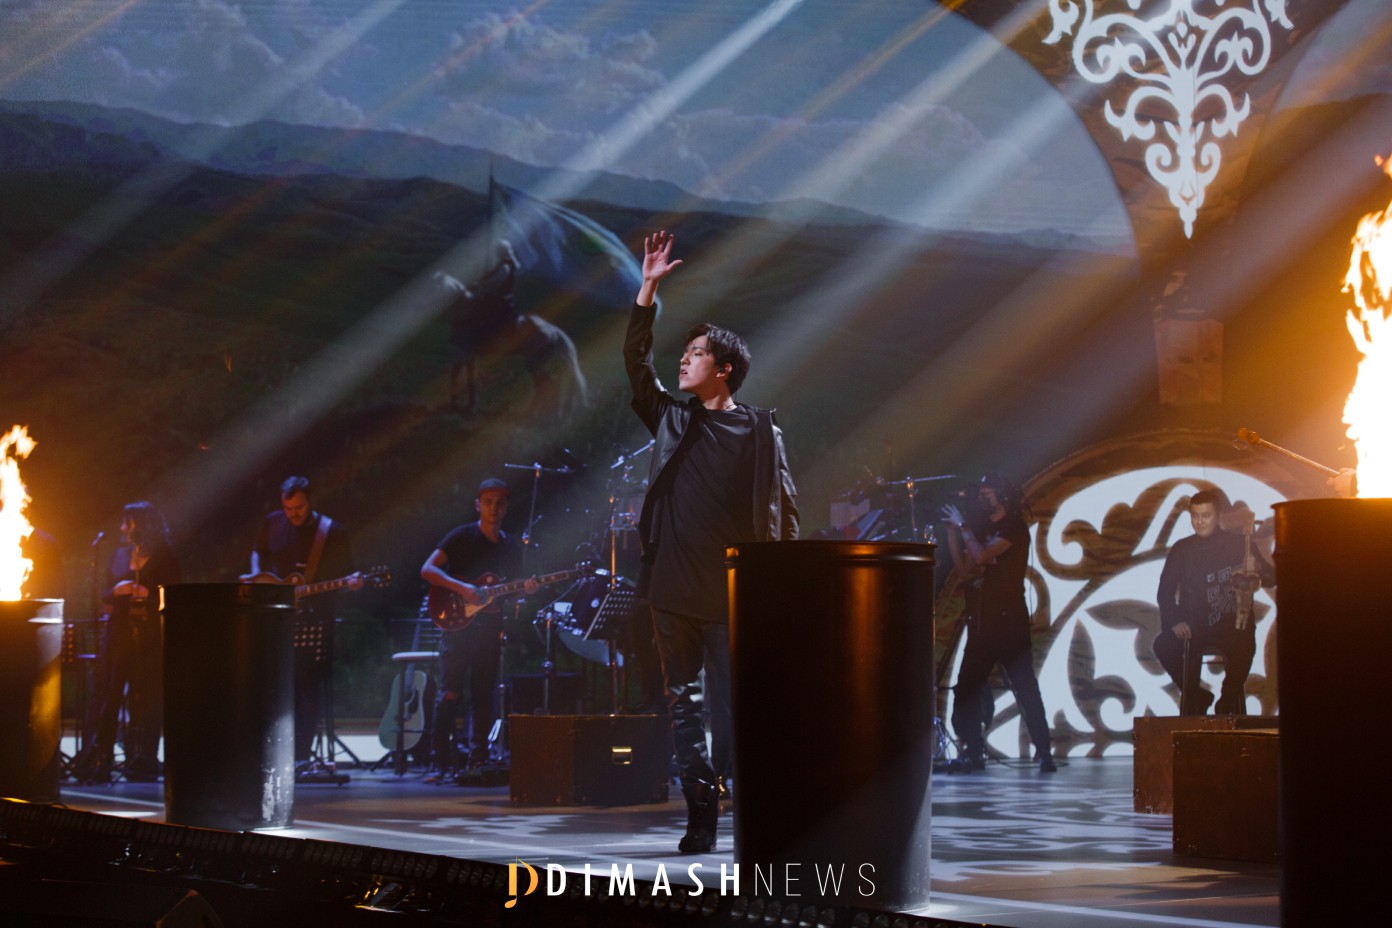 "DIMASH DIGITAL SHOW": How Dimash's First Online Concert was Prepared